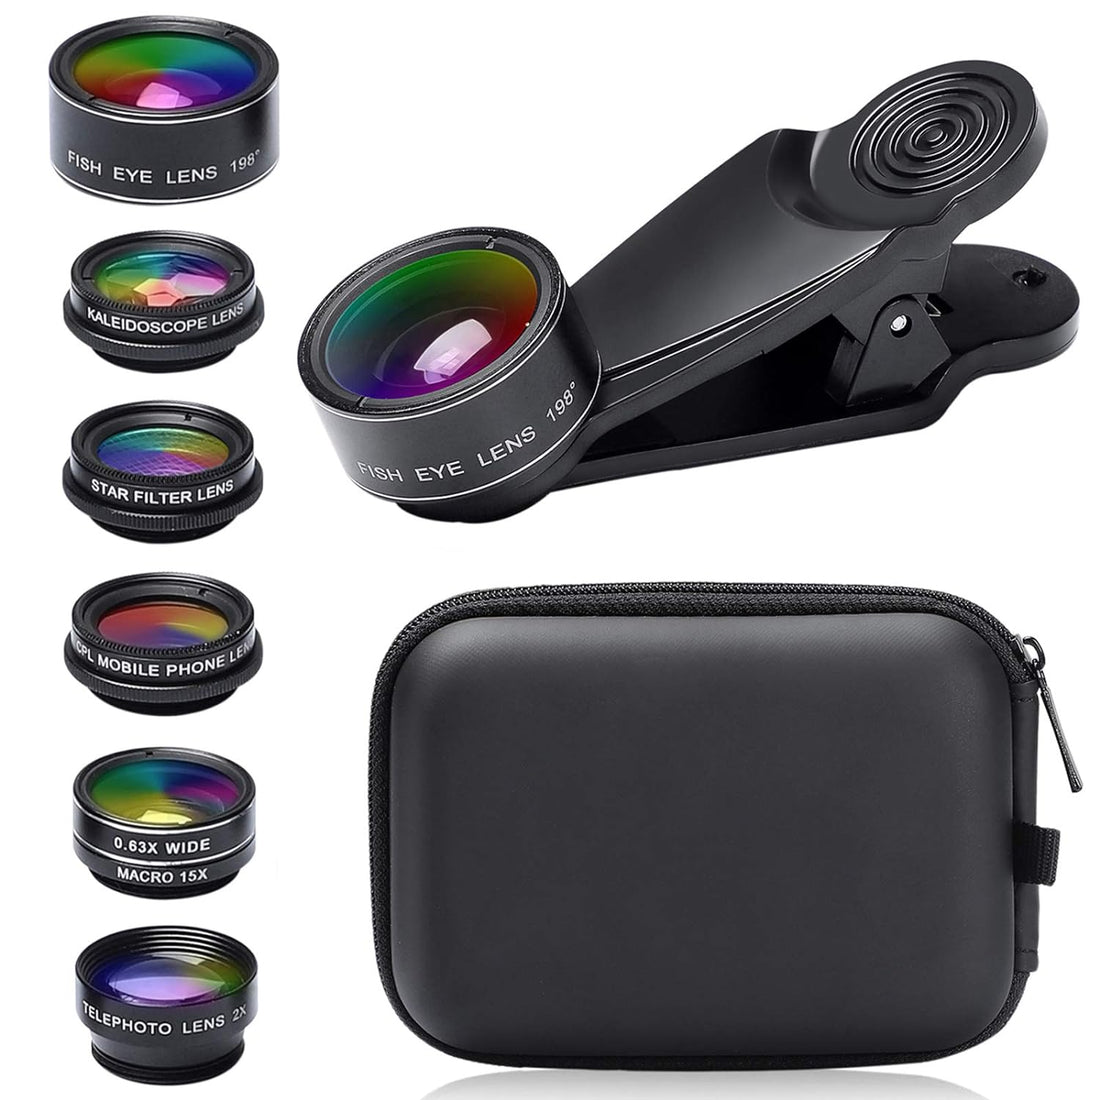 KINGMAS 7-in-1 Phone Camera Lens Kits, Universal Zoom 2X Telephoto Lens + 198° Fisheye Lens + 0.63X Wide Angle Lens + 15X Macro Lens + CPL + Kaleidoscope Lens + Starburst Lens with Zipper Bag